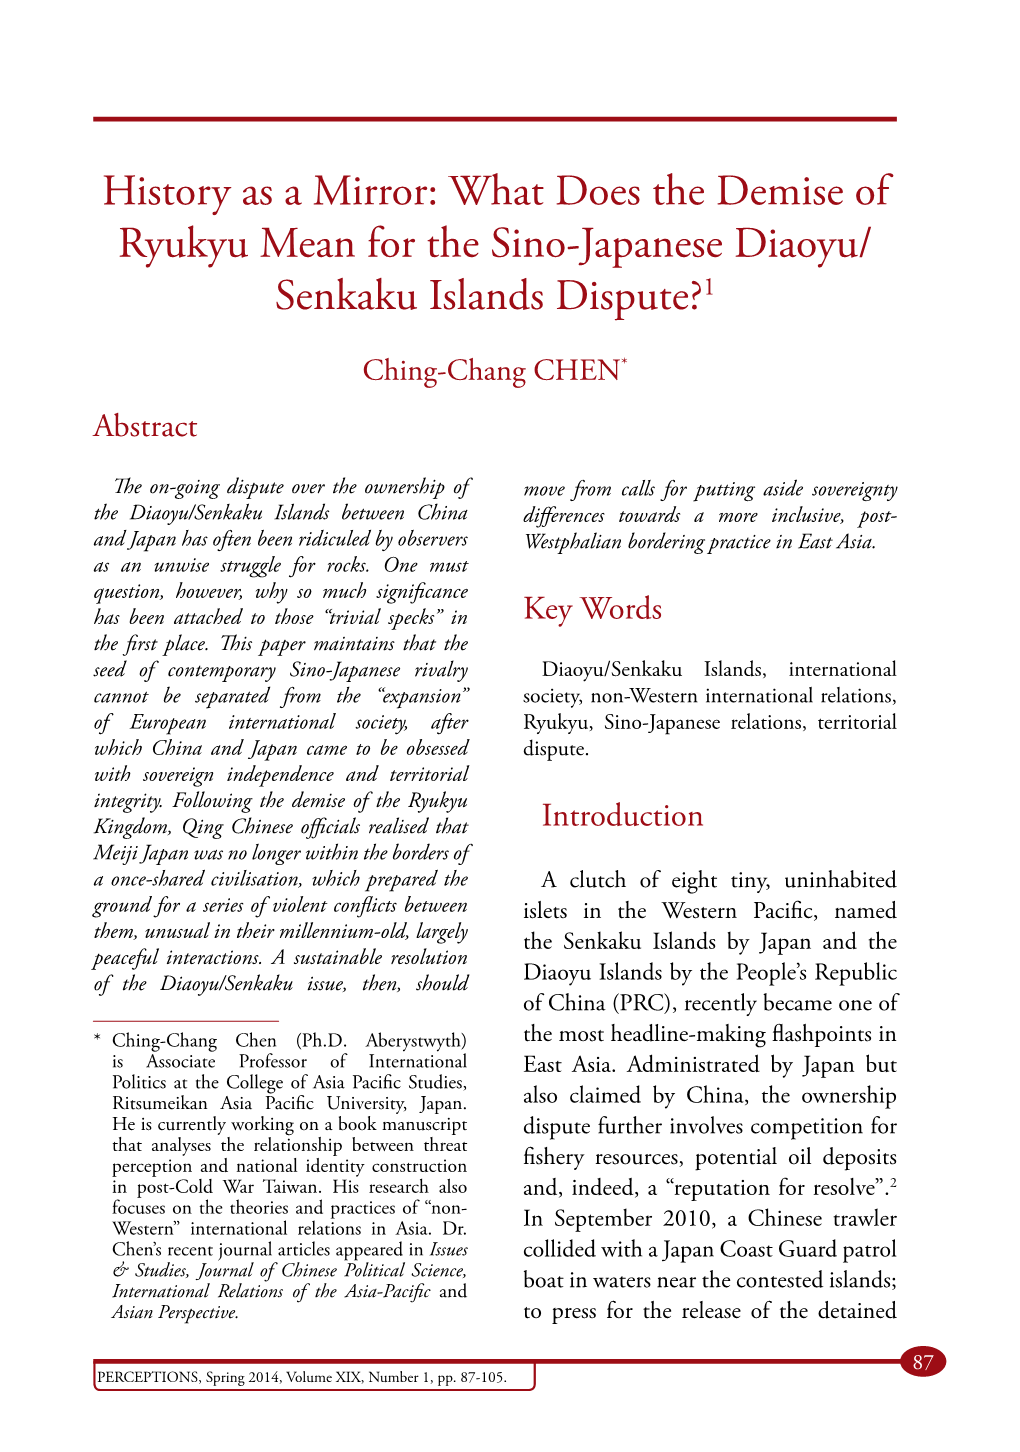 What Does the Demise of Ryukyu Mean for the Sino-Japanese Diaoyu/ Senkaku Islands Dispute?1